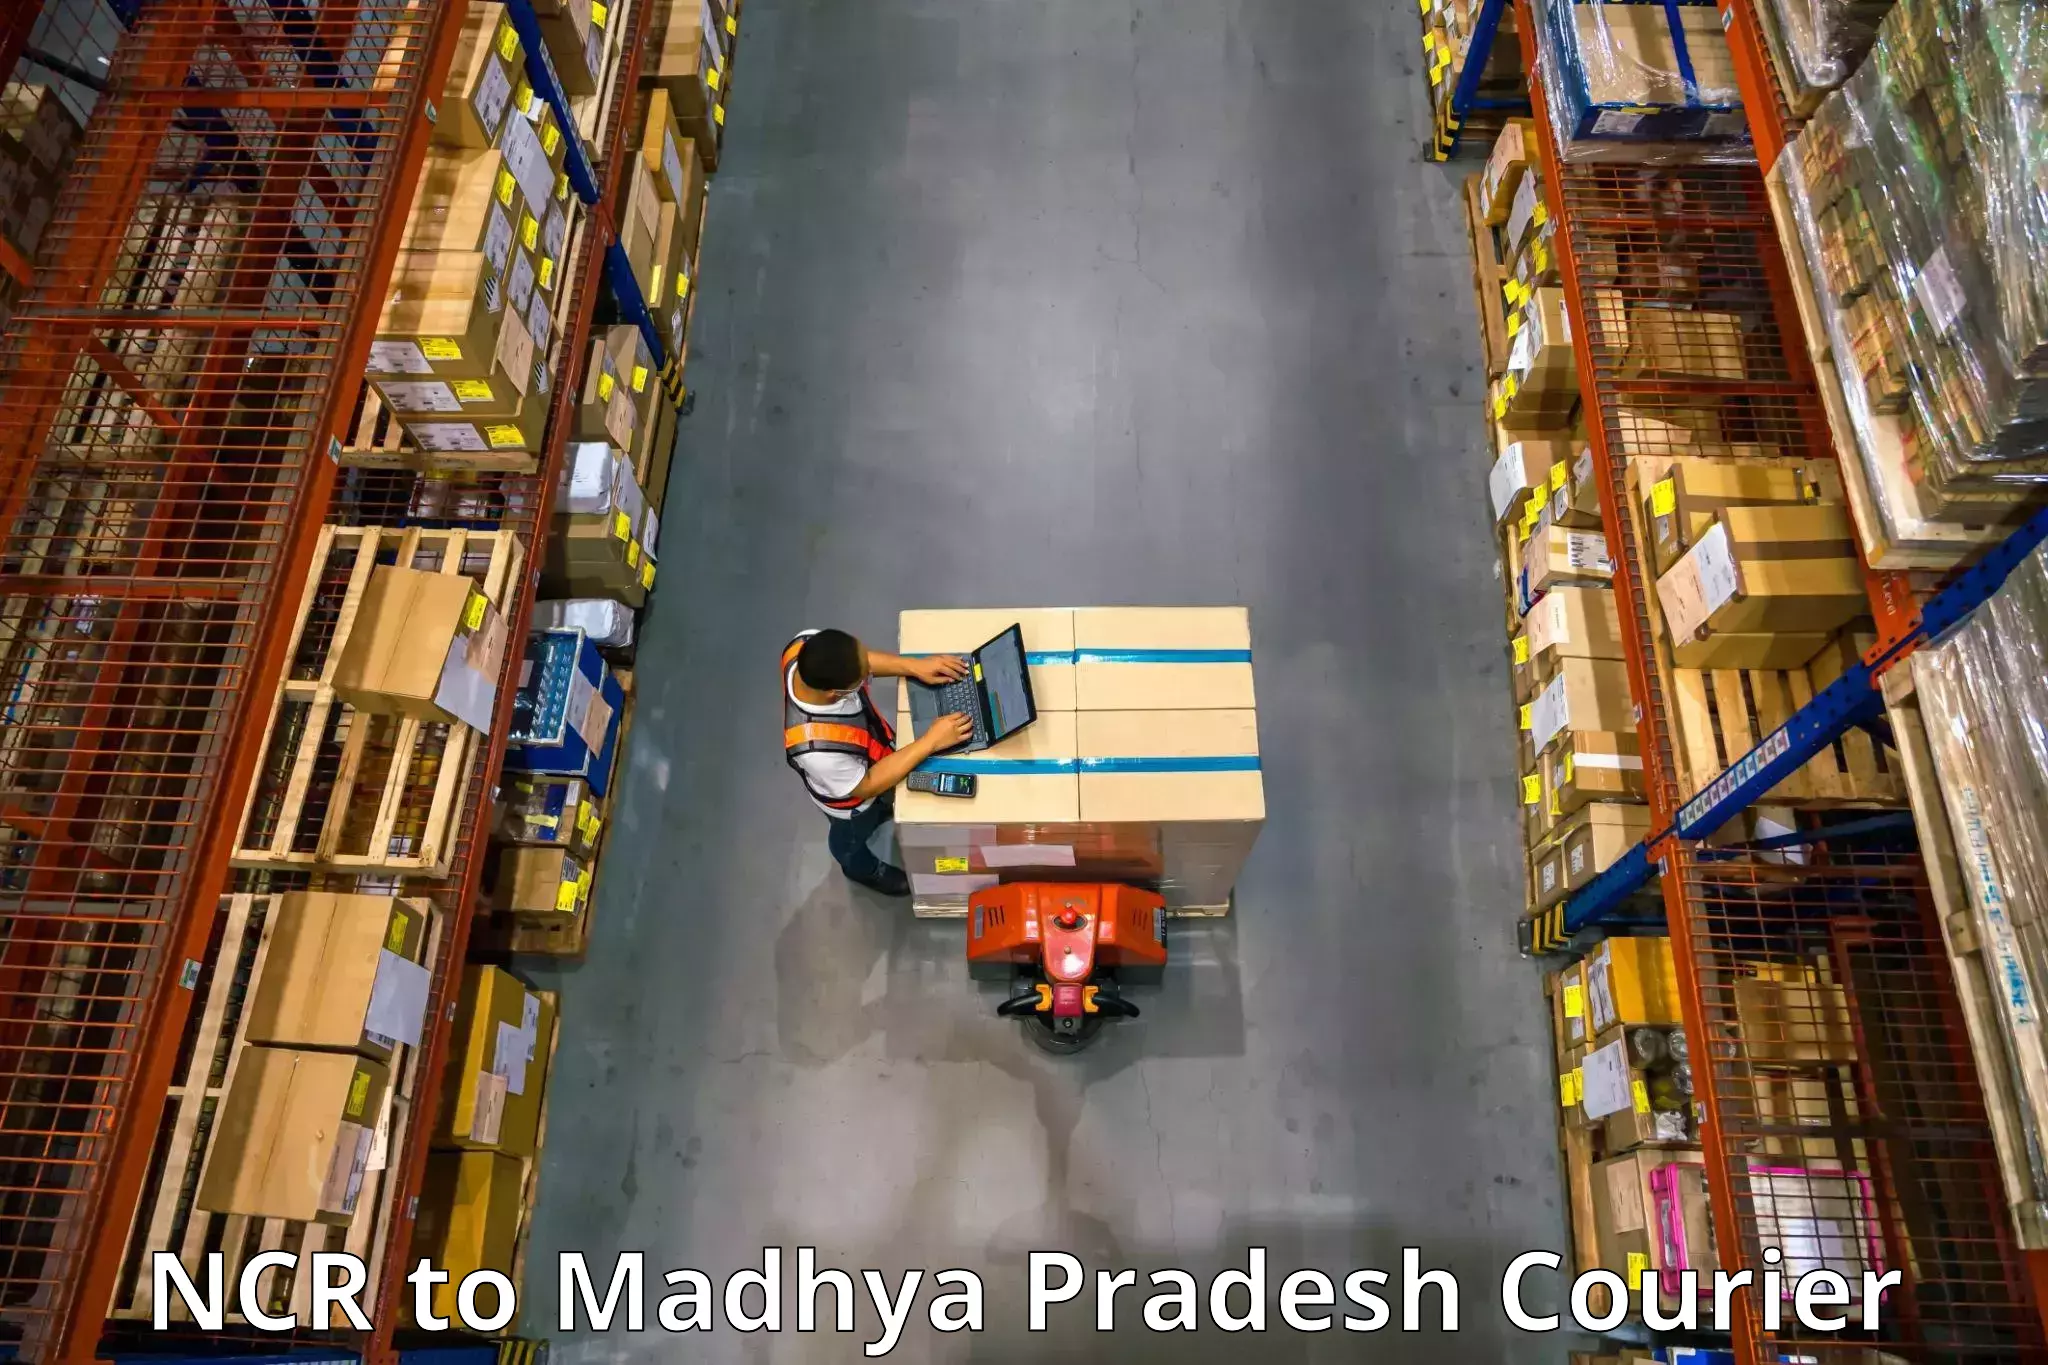 Efficient moving company NCR to Madhya Pradesh